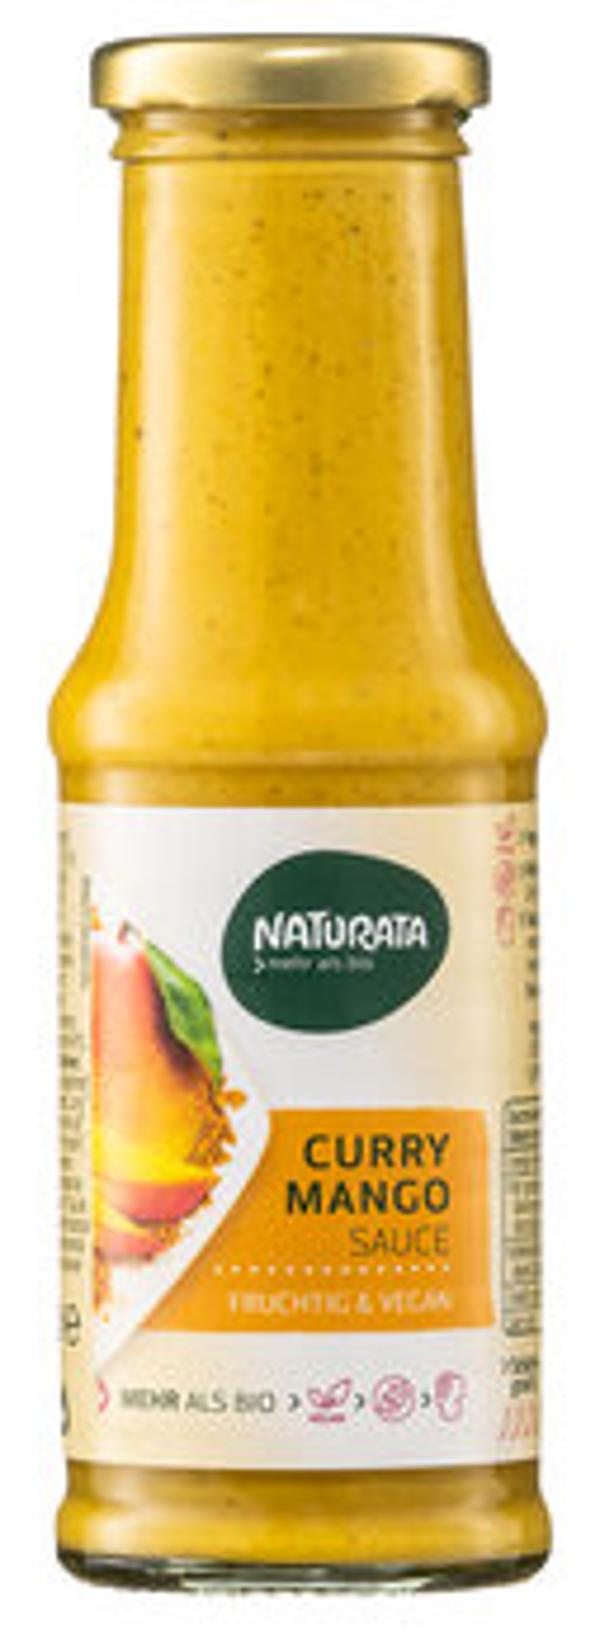 Produktfoto zu Naturata Curry Mango Sauce 210ml